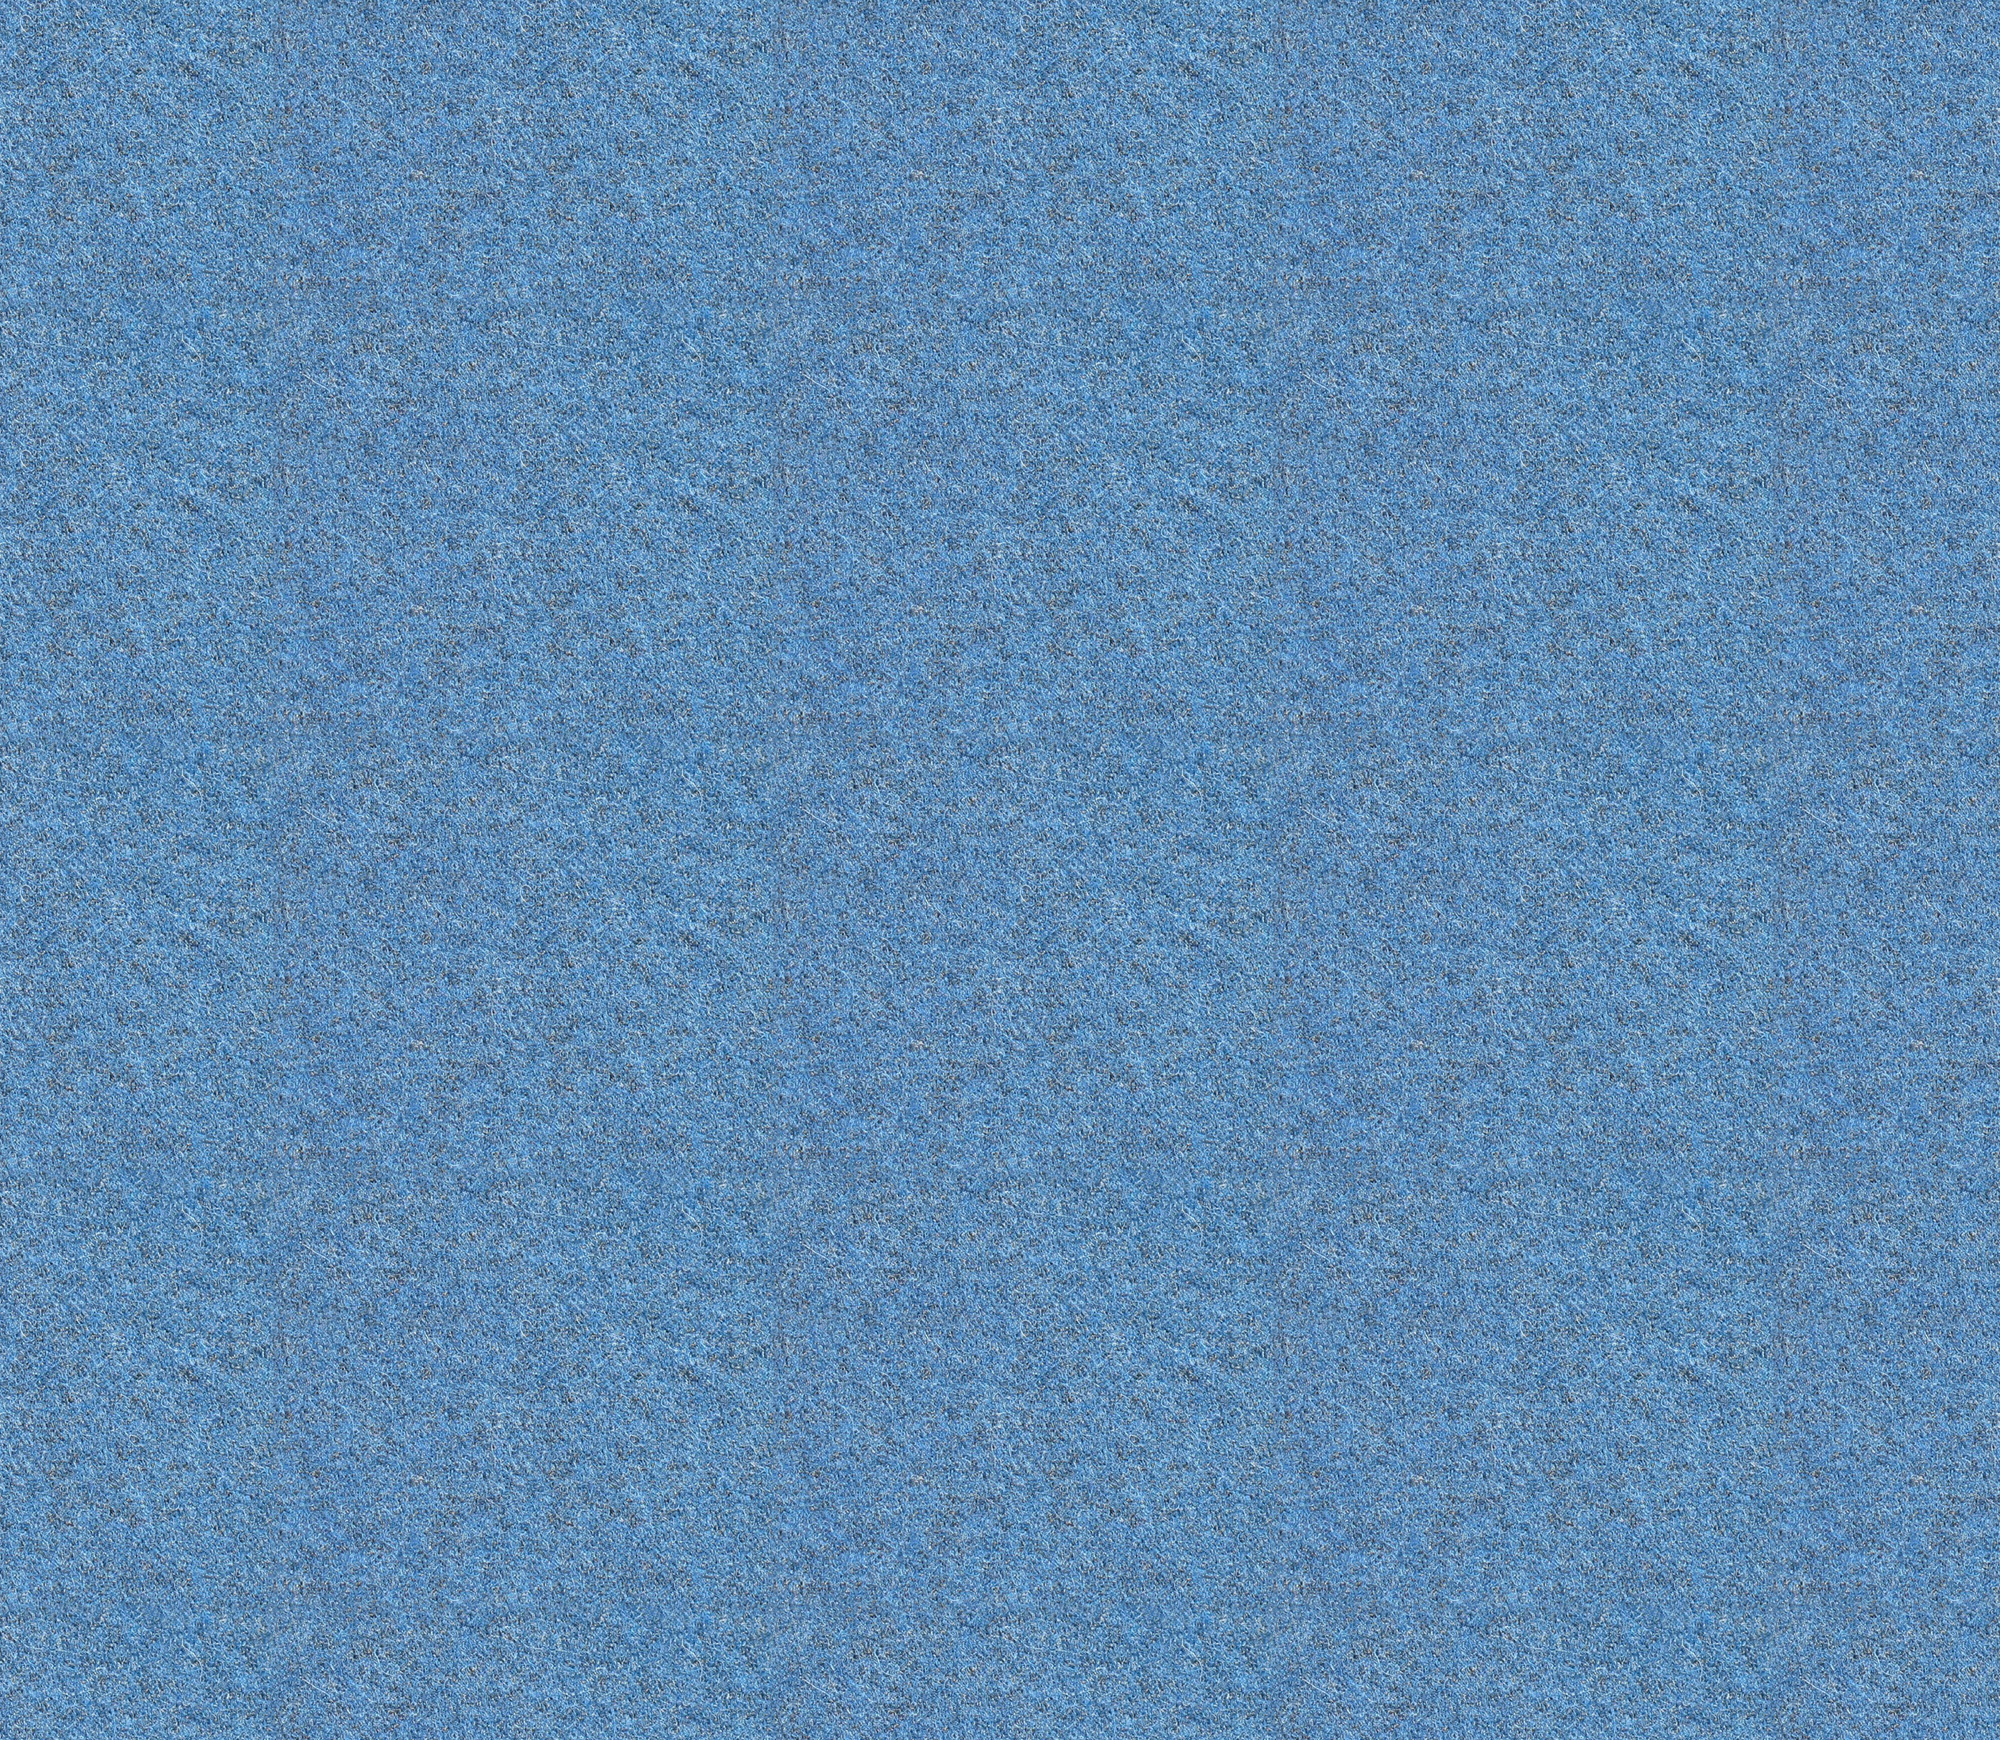 Blue Mohair Fabric Texture  